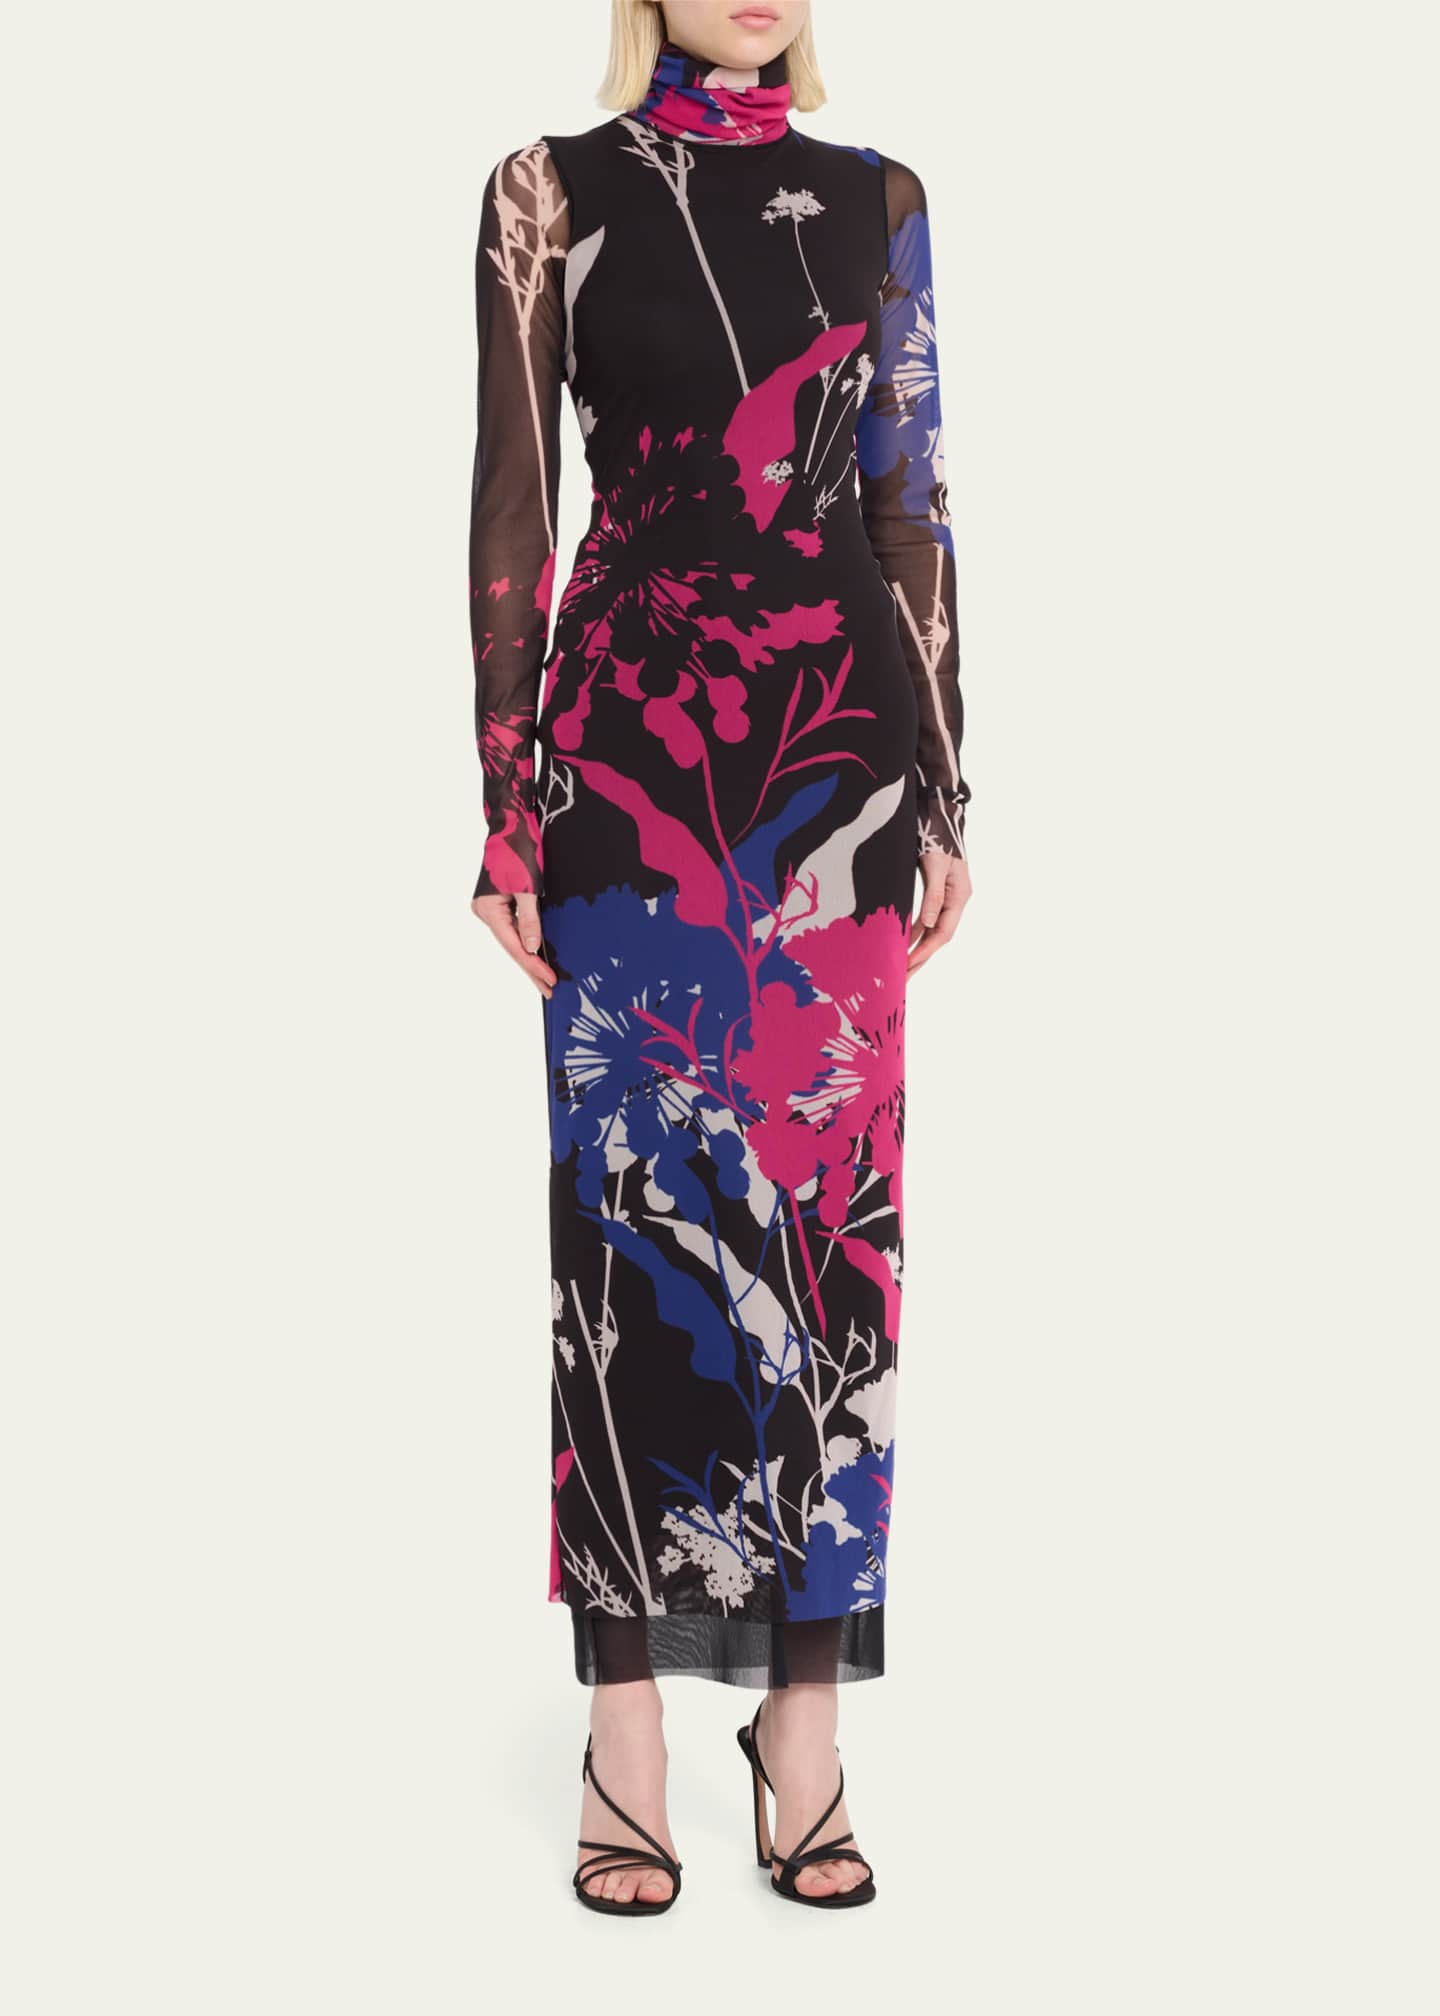 WNDRLUST by Prabal Gurung Daphne Floral Turtleneck Dress - Bergdorf Goodman